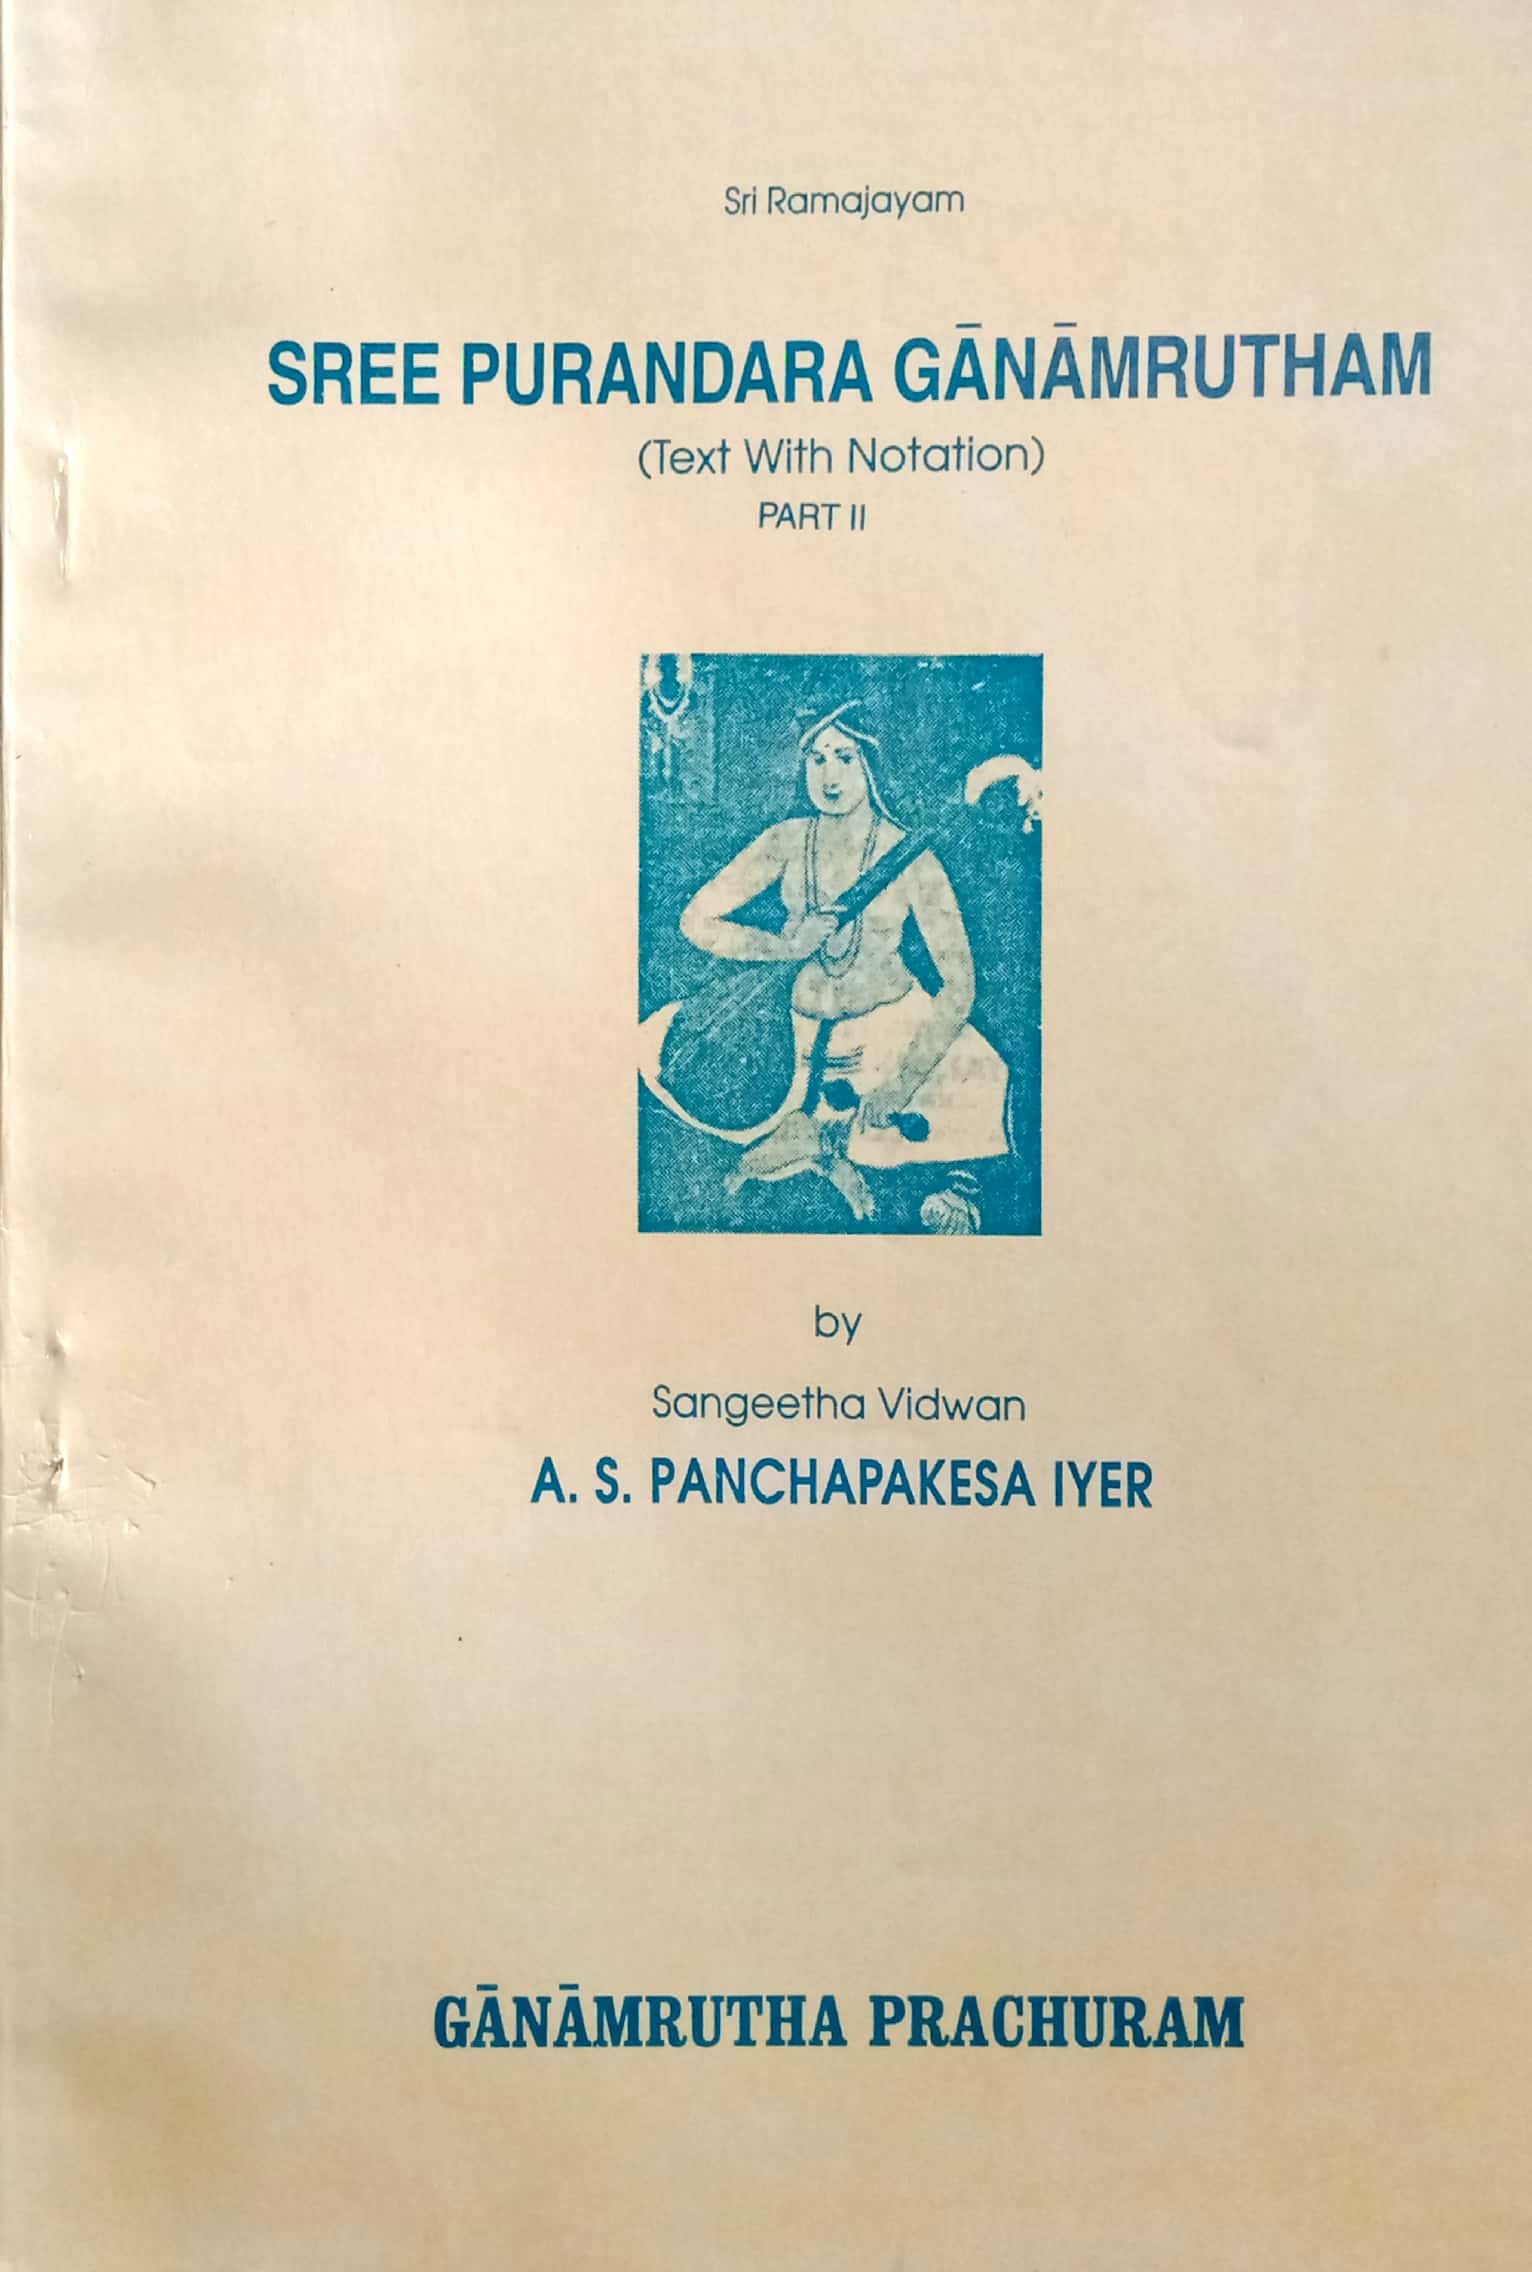 Routemybook - Buy Sree Purandhara Ganamrutham Part - II - English by A ...